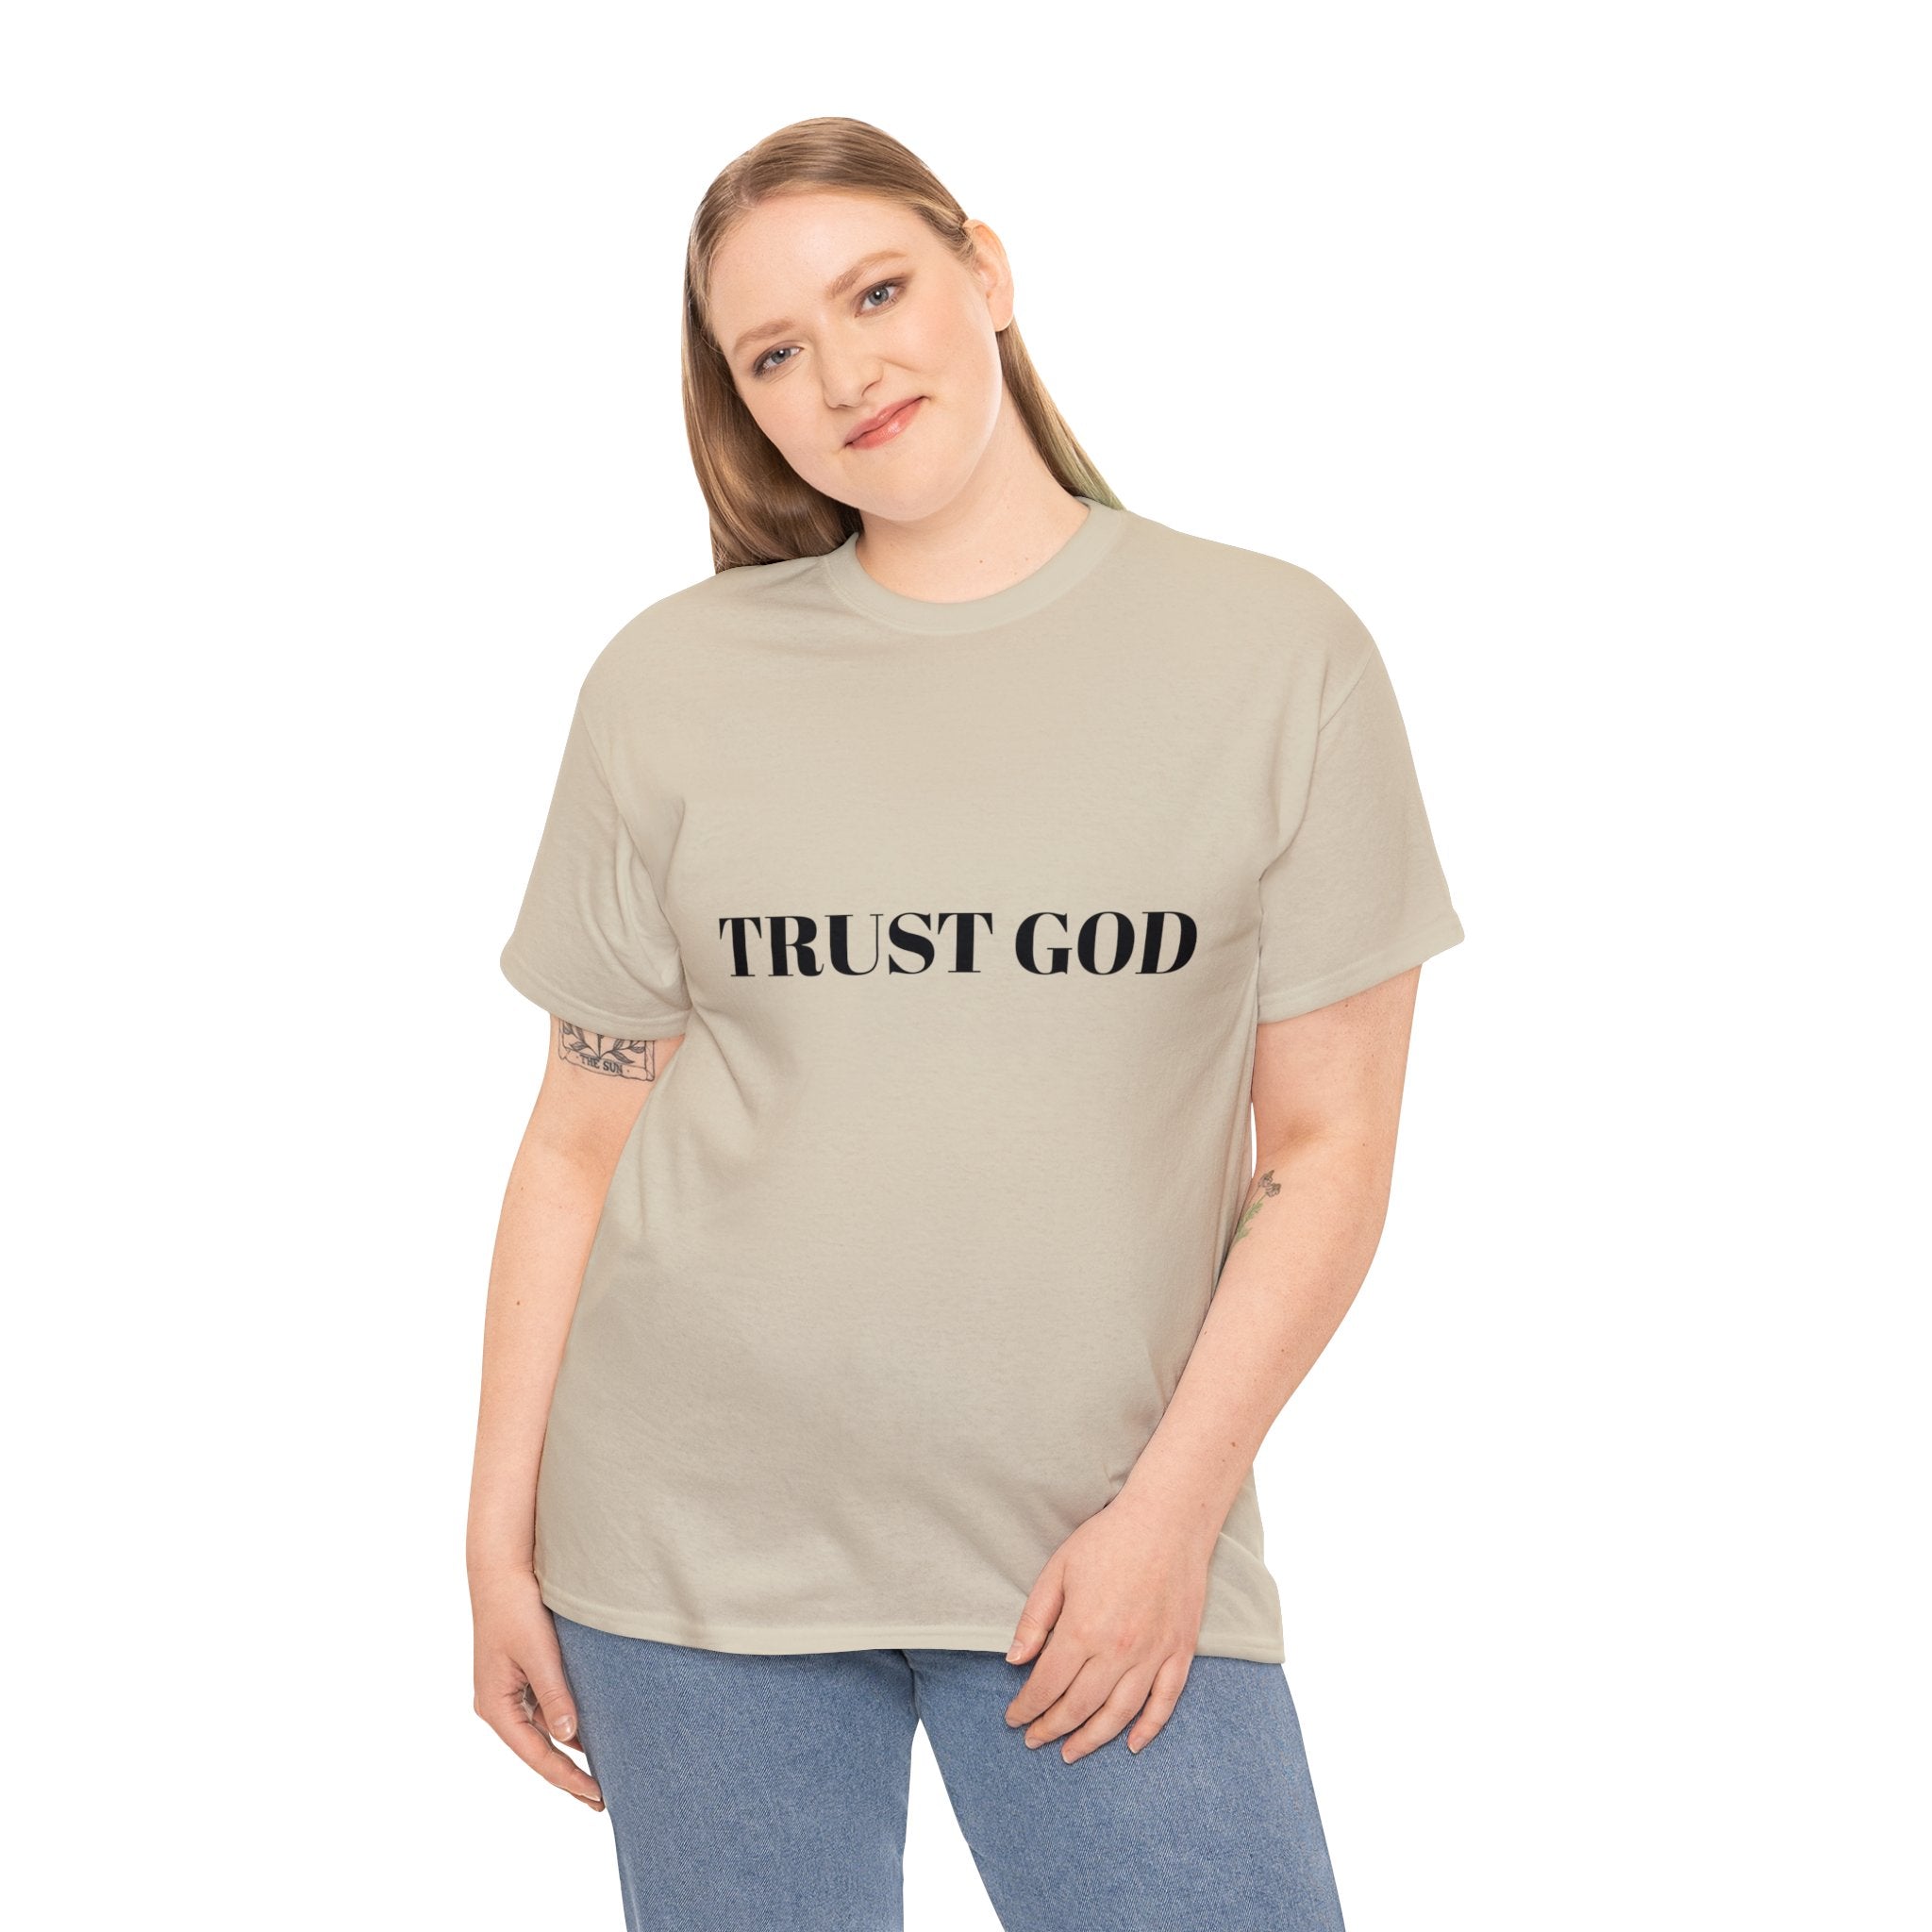 Trust God tshirt